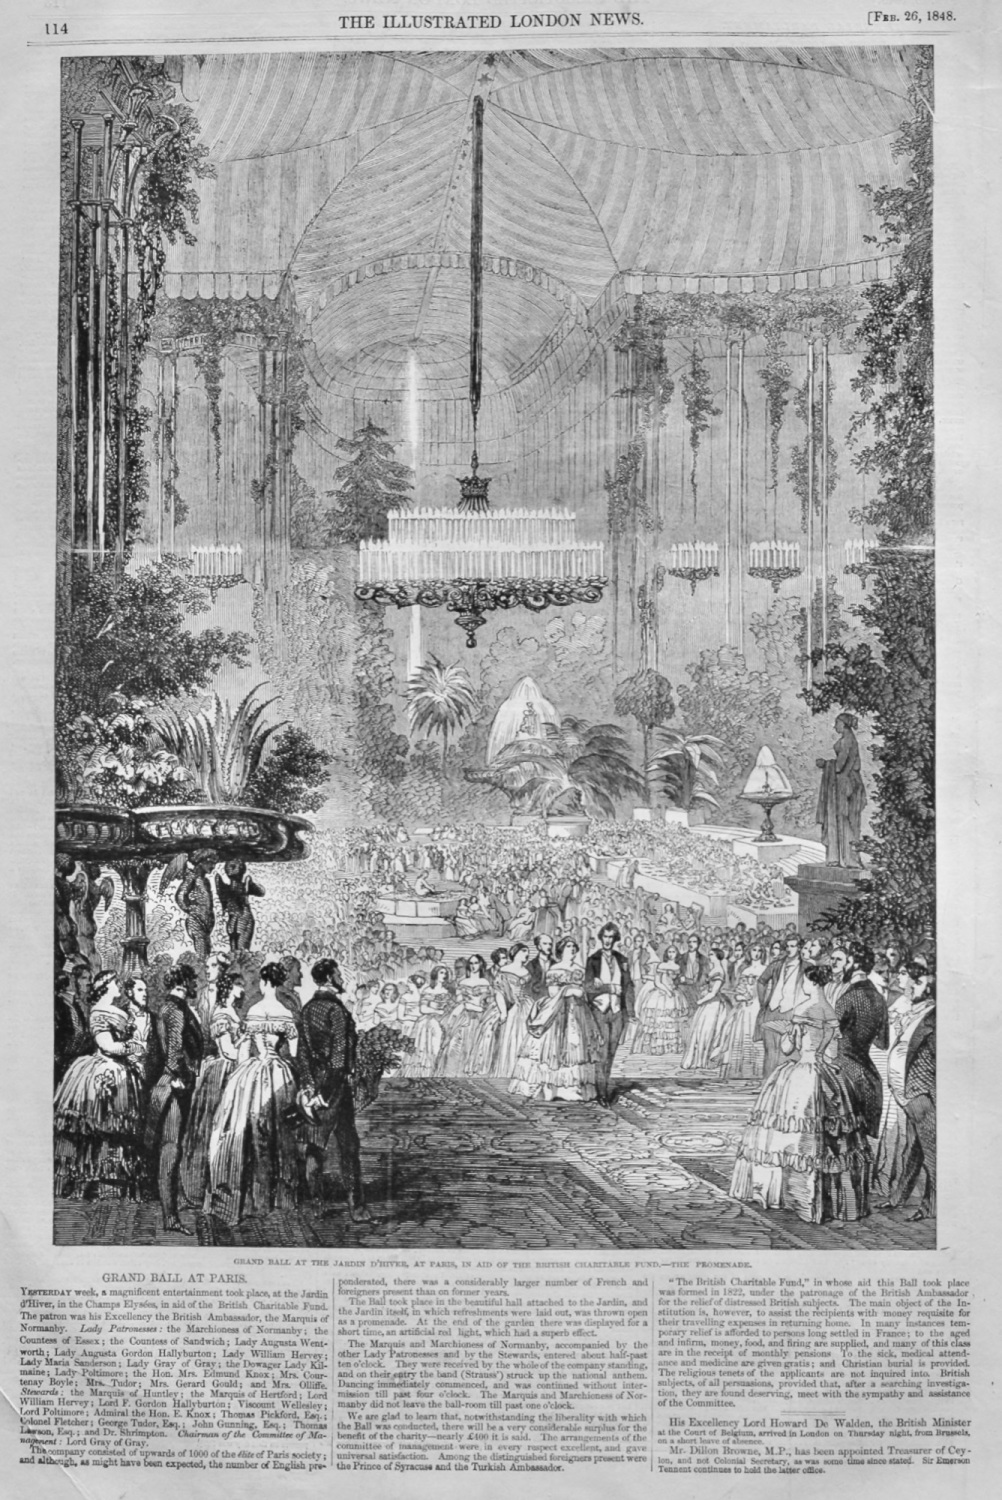 Grand Ball at the Jardin D'Hiver, at Paris, in aid of the British Charitabl